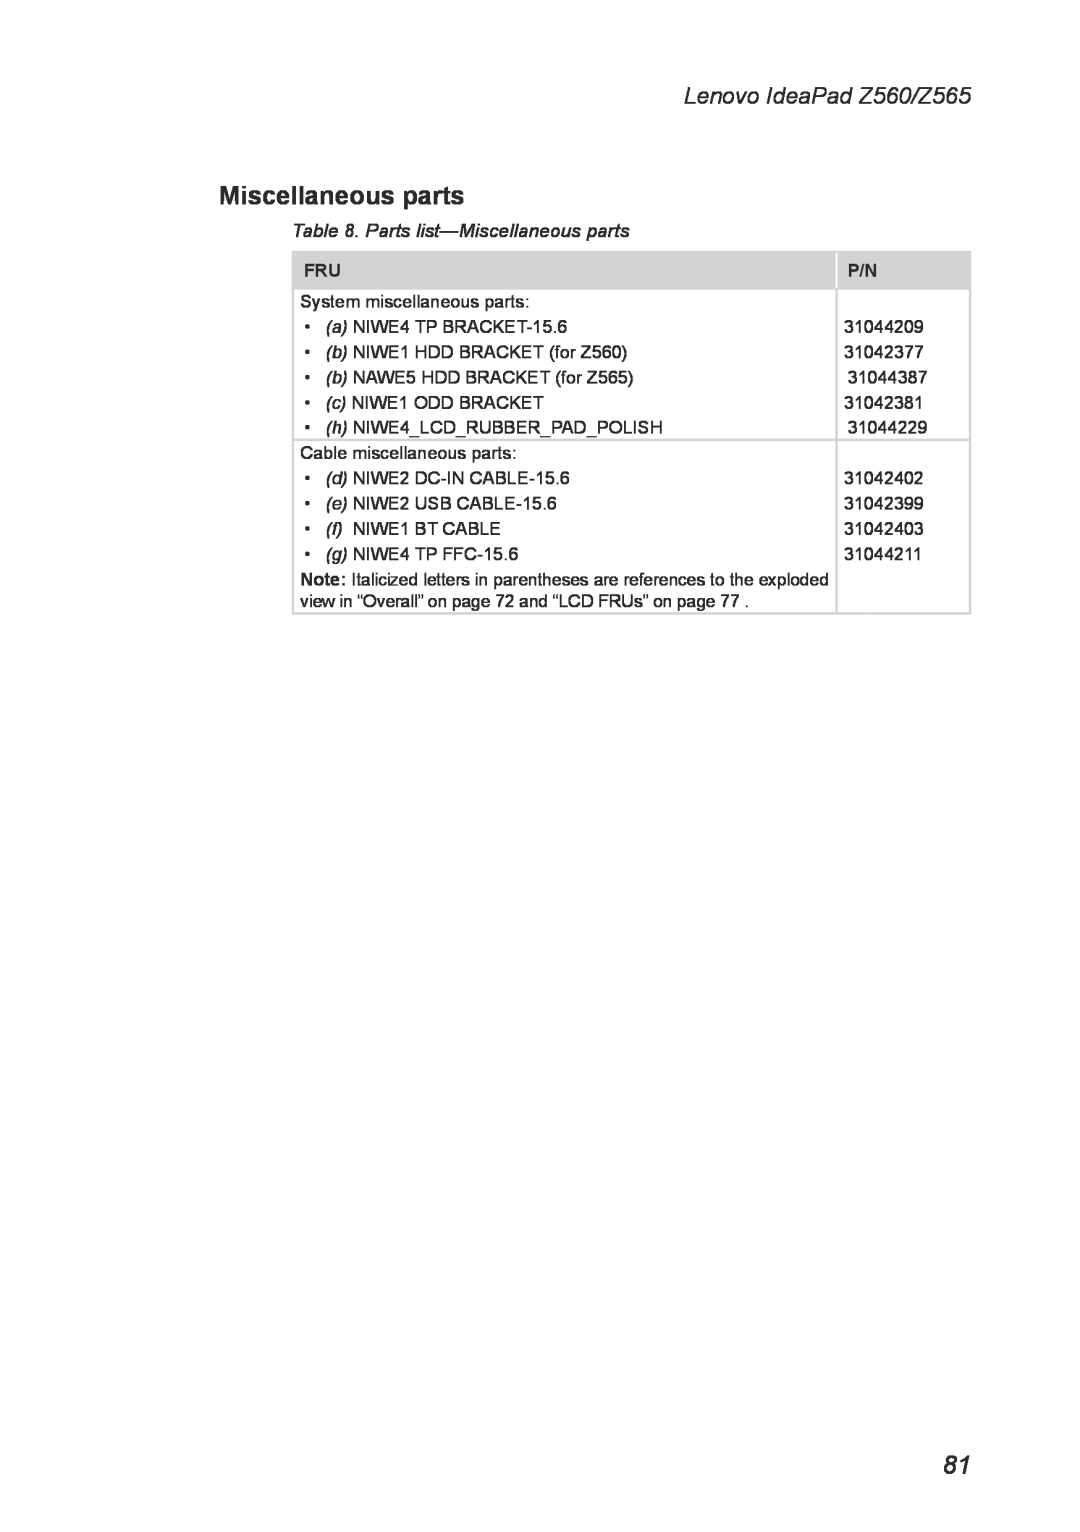 Lenovo manual Parts list-Miscellaneous parts, Lenovo IdeaPad Z560/Z565 